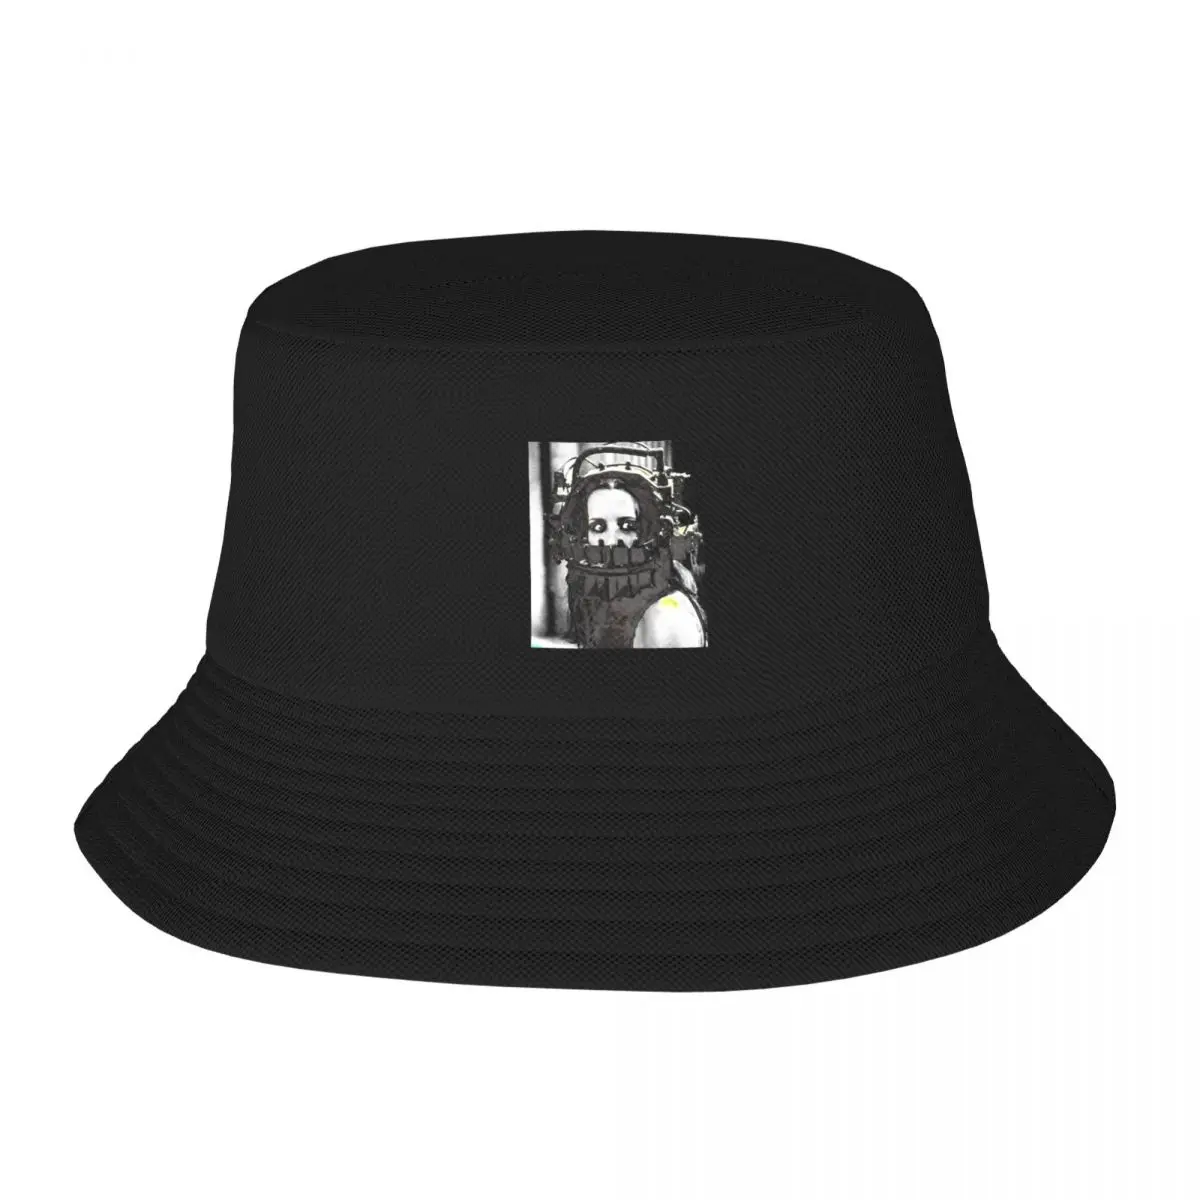 

Amanda From Saw Movie Bucket Hat Vocation Getaway Headwear Merch Fishing Hats for Camping Women Men Bob Hat Packable